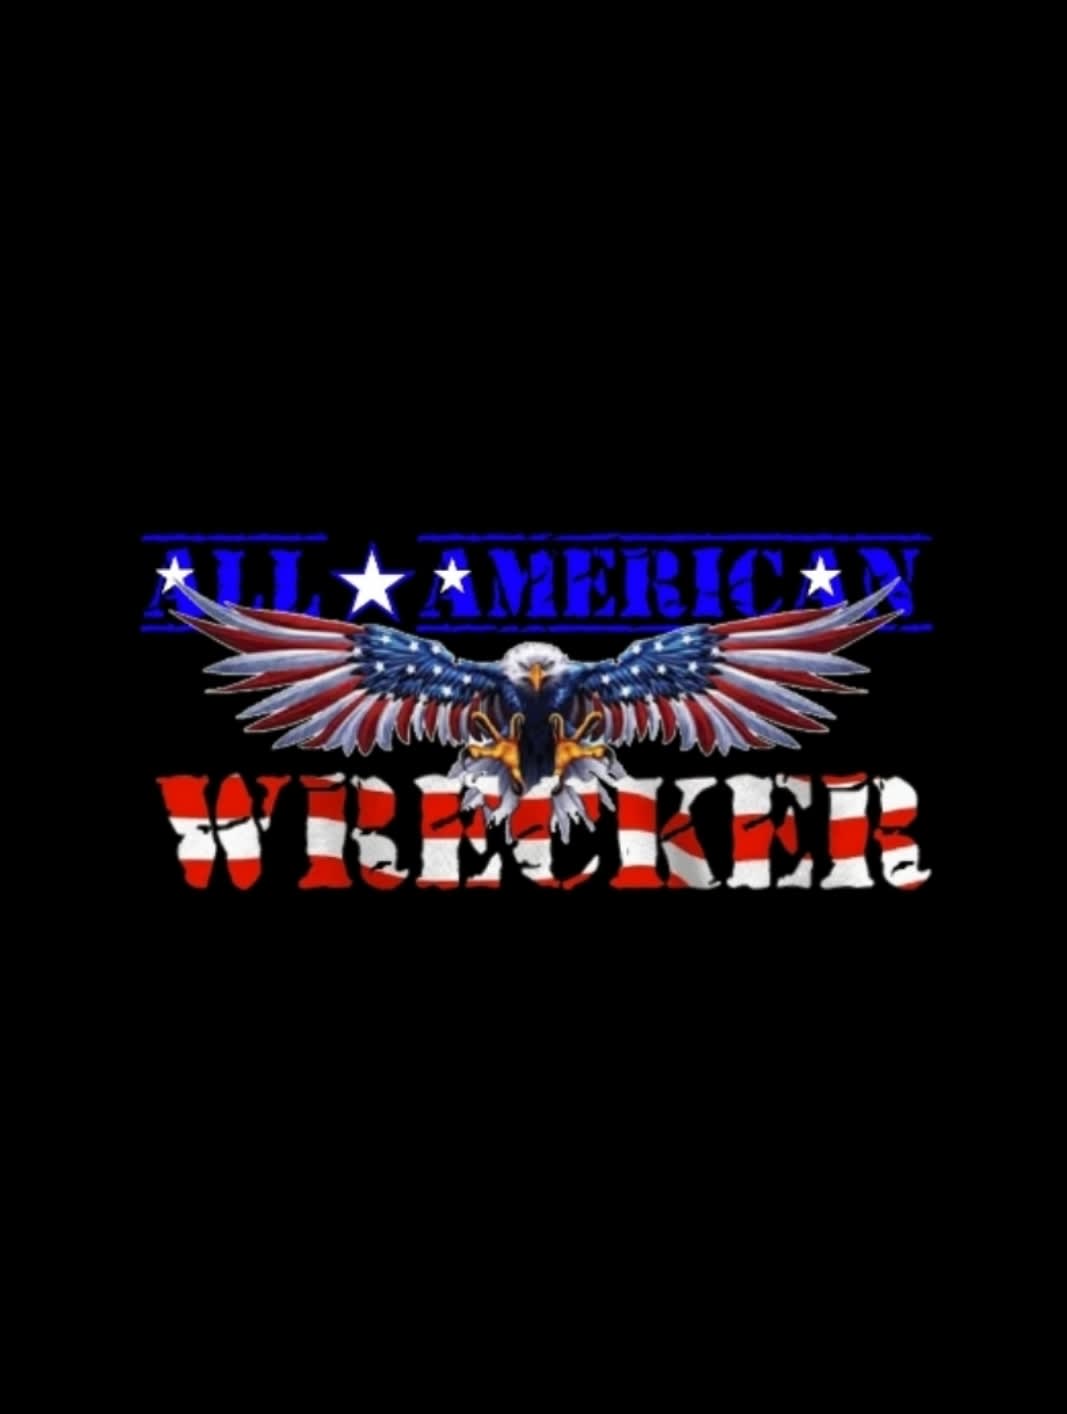 All American Wrecker